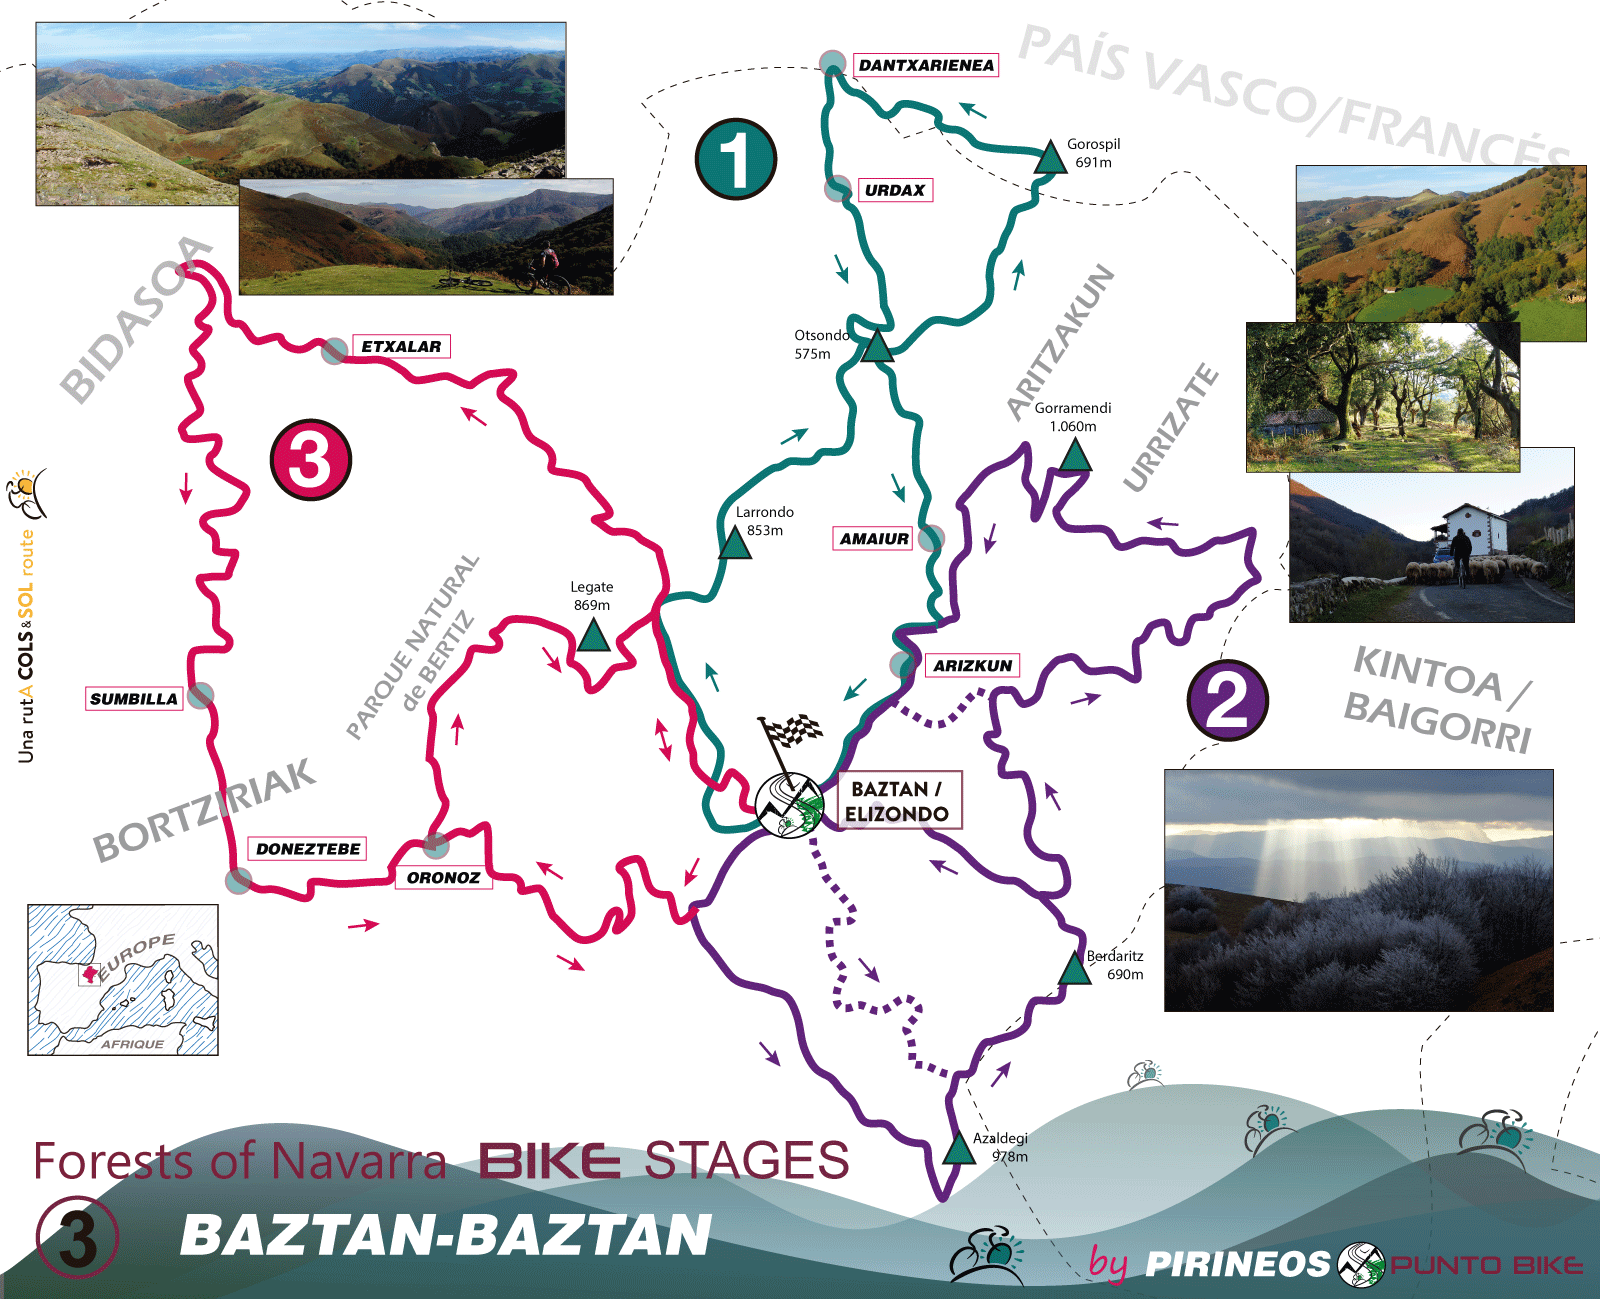 Bosques-de-Navarra-3-Baztan-Baztan-Map